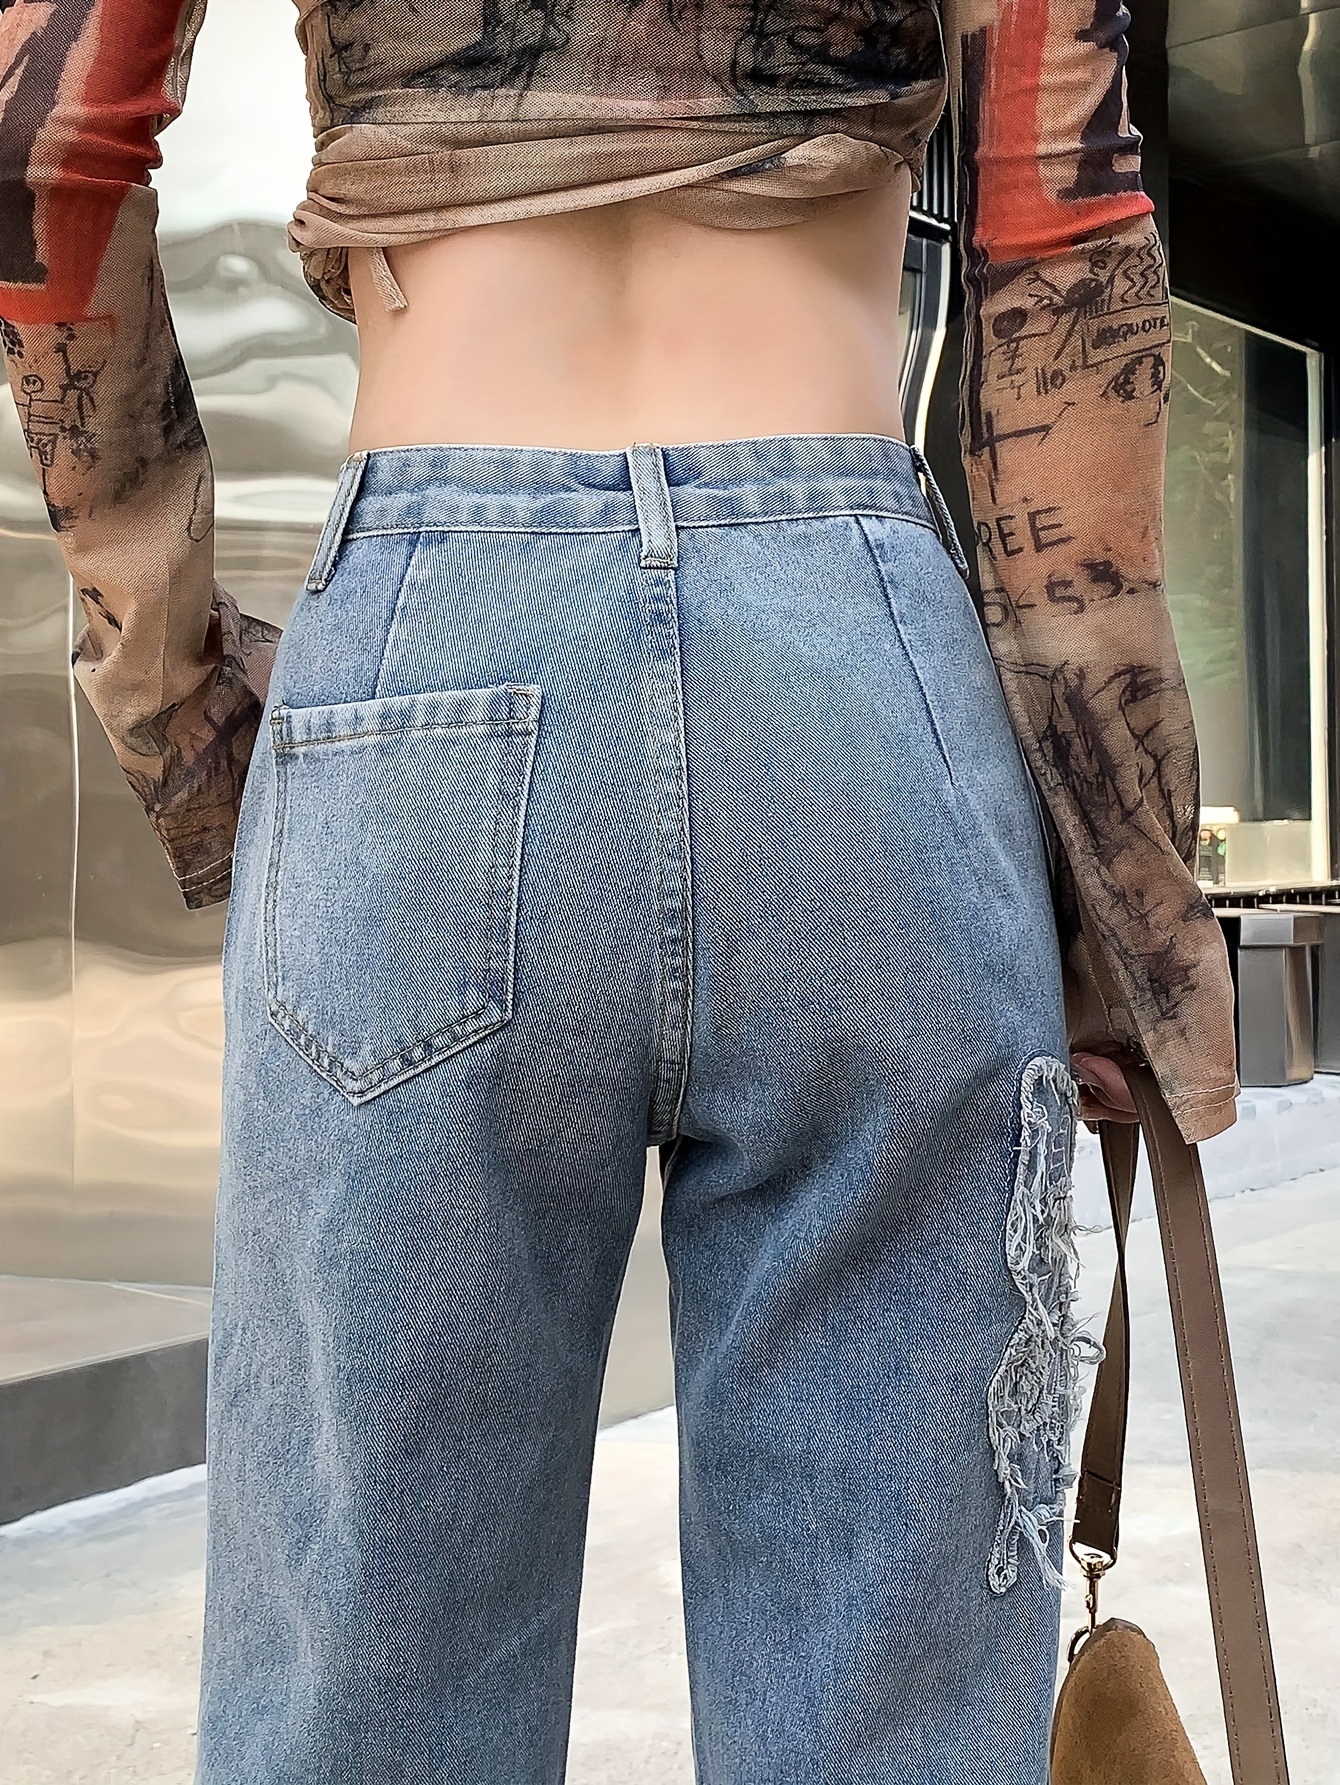 Women's Capri Pants in Trendy Denim & Embroidered Styles